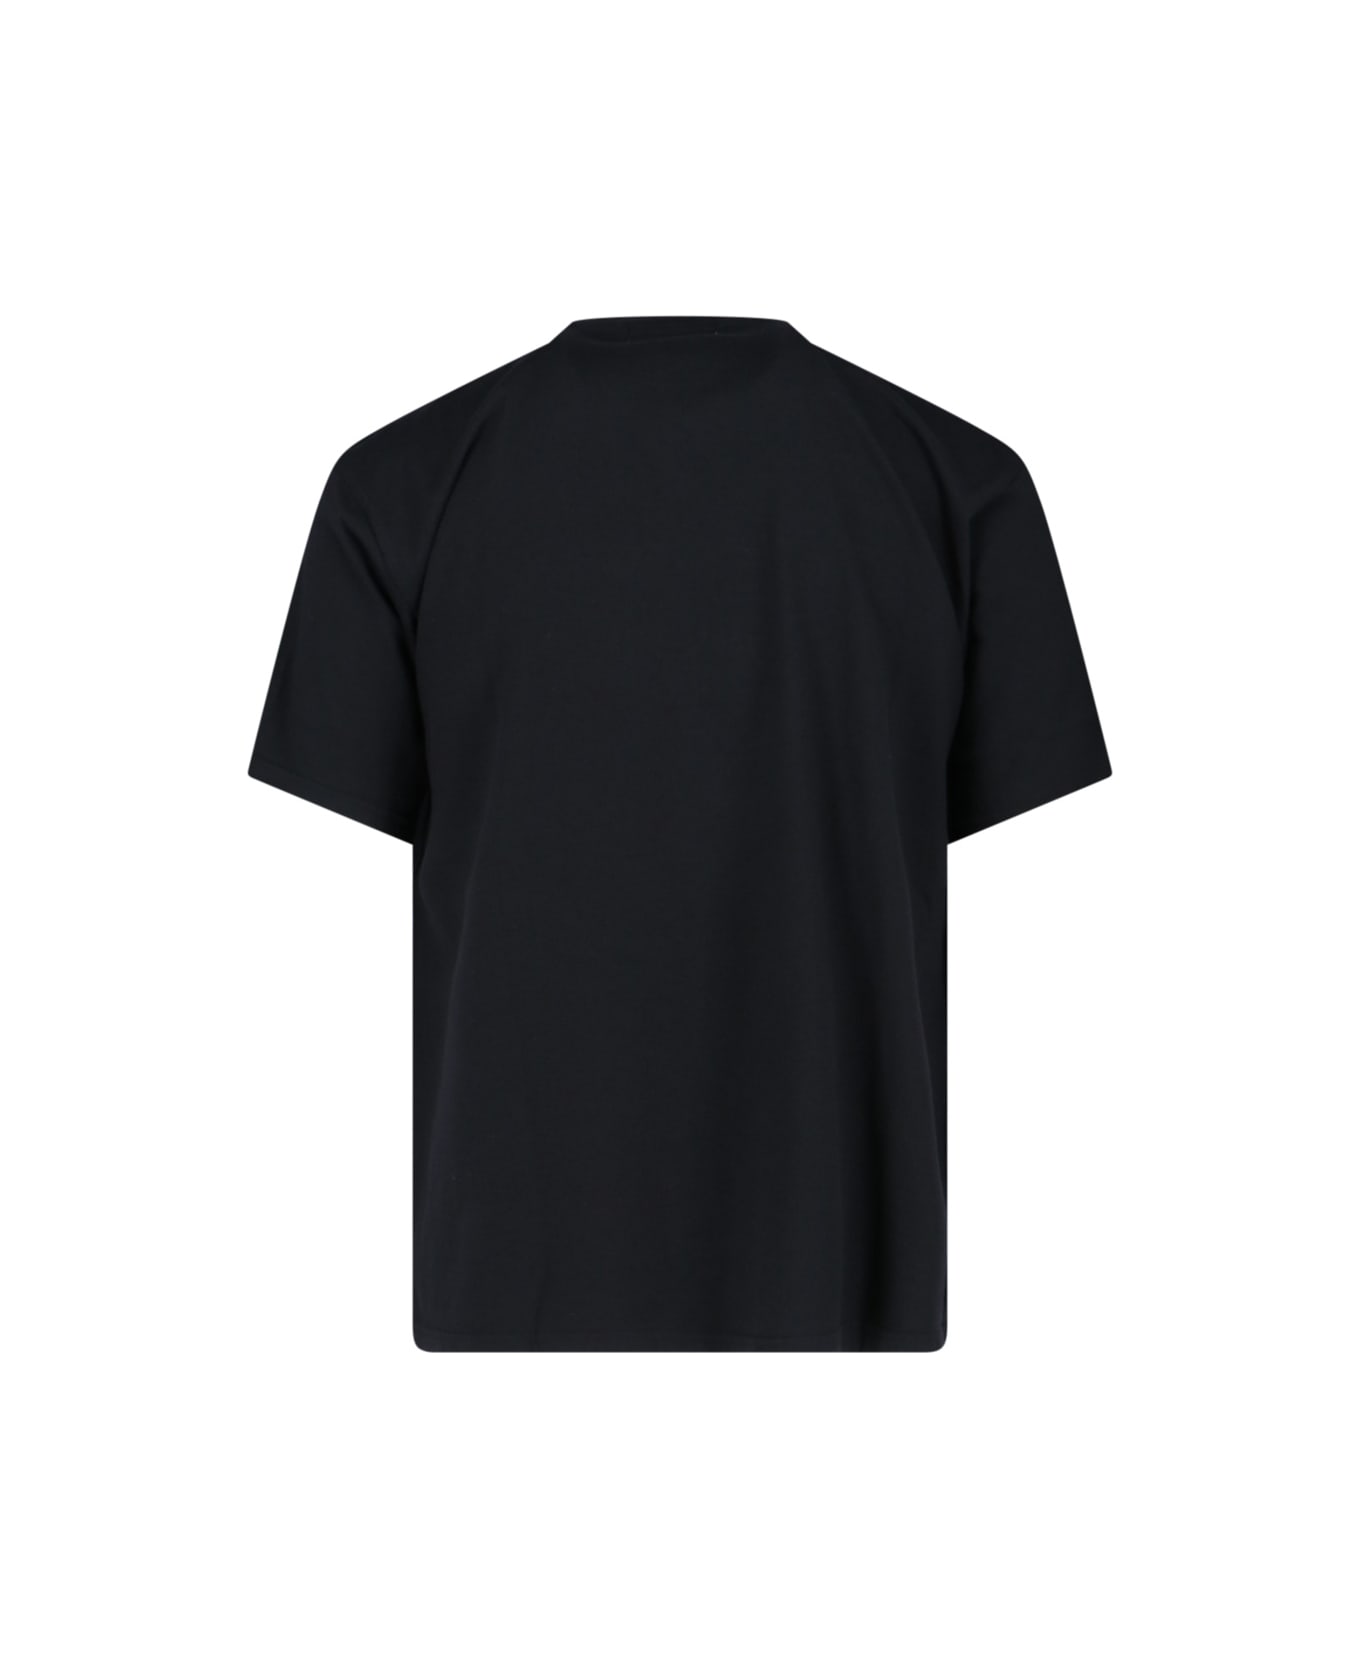 Undercover Jun Takahashi '655321' T-shirt - Black   シャツ